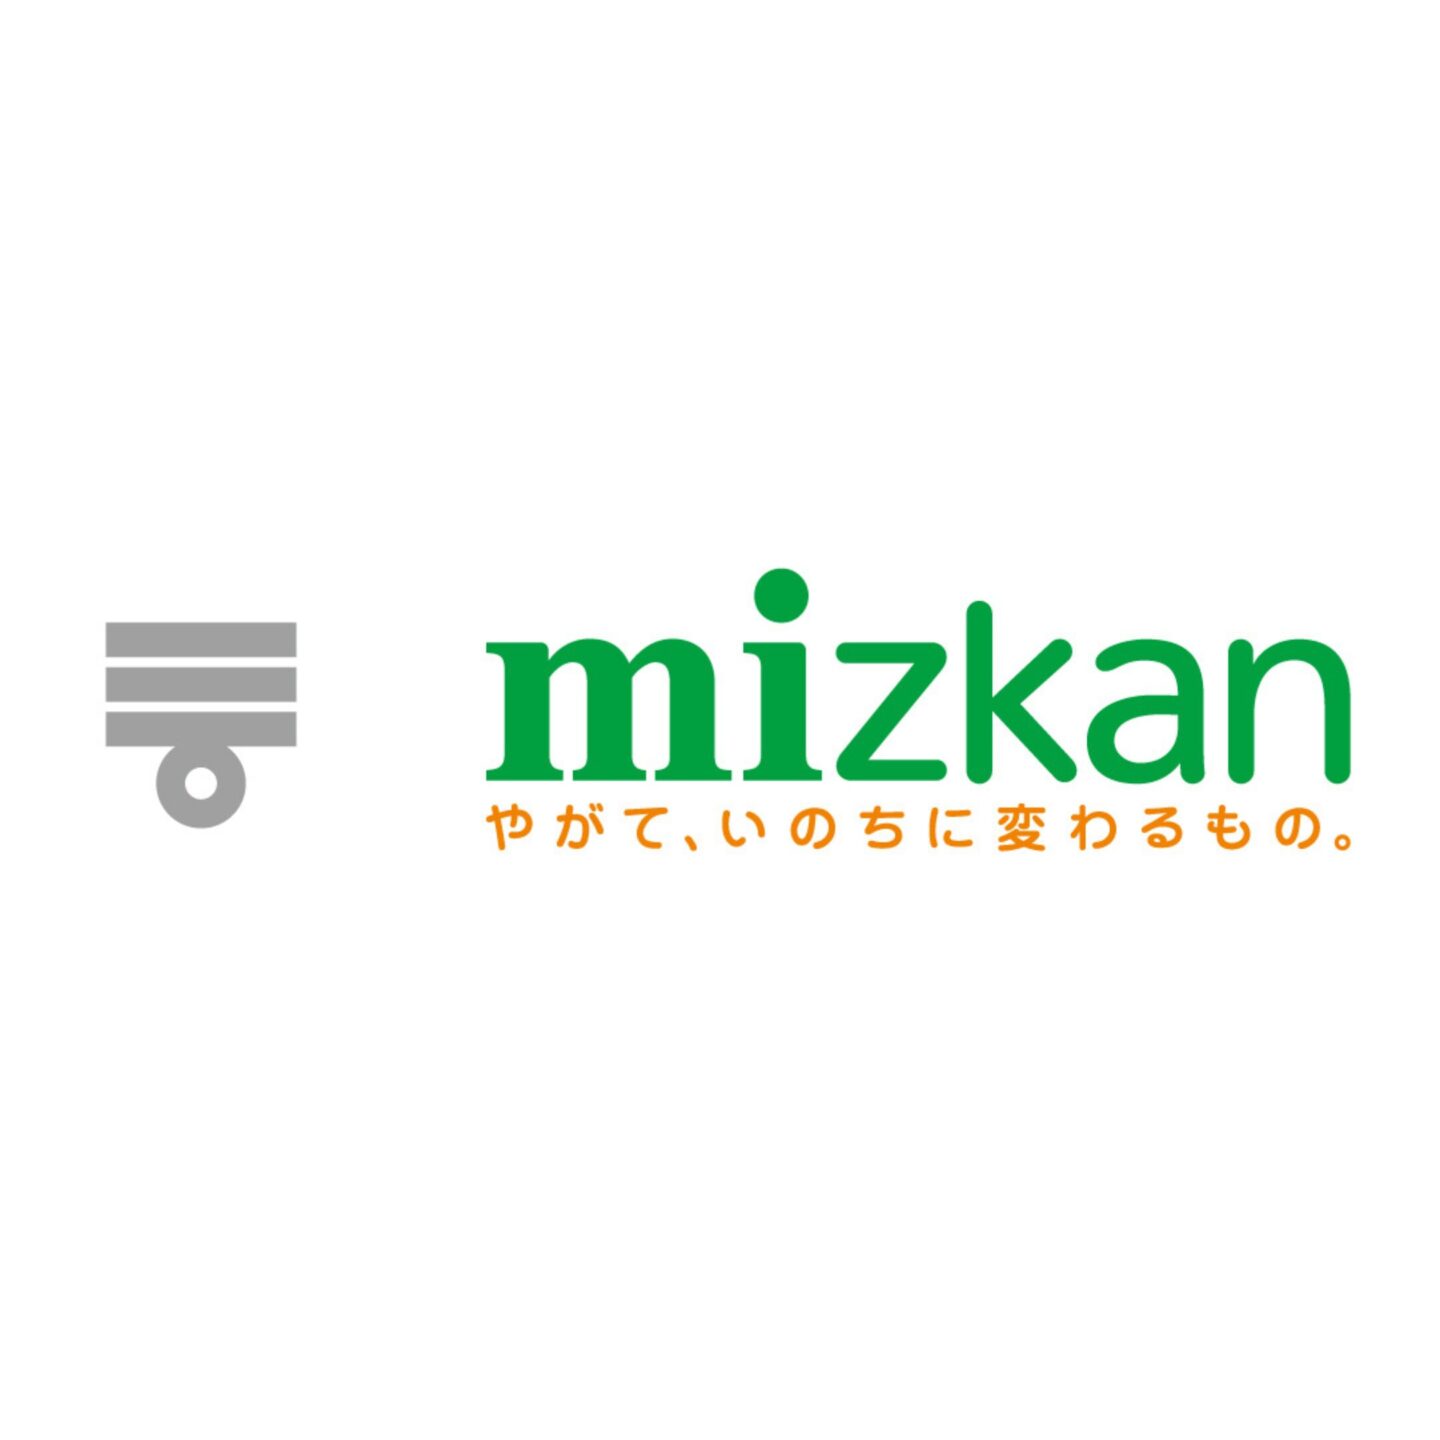 Mizkan Co.,Ltd.